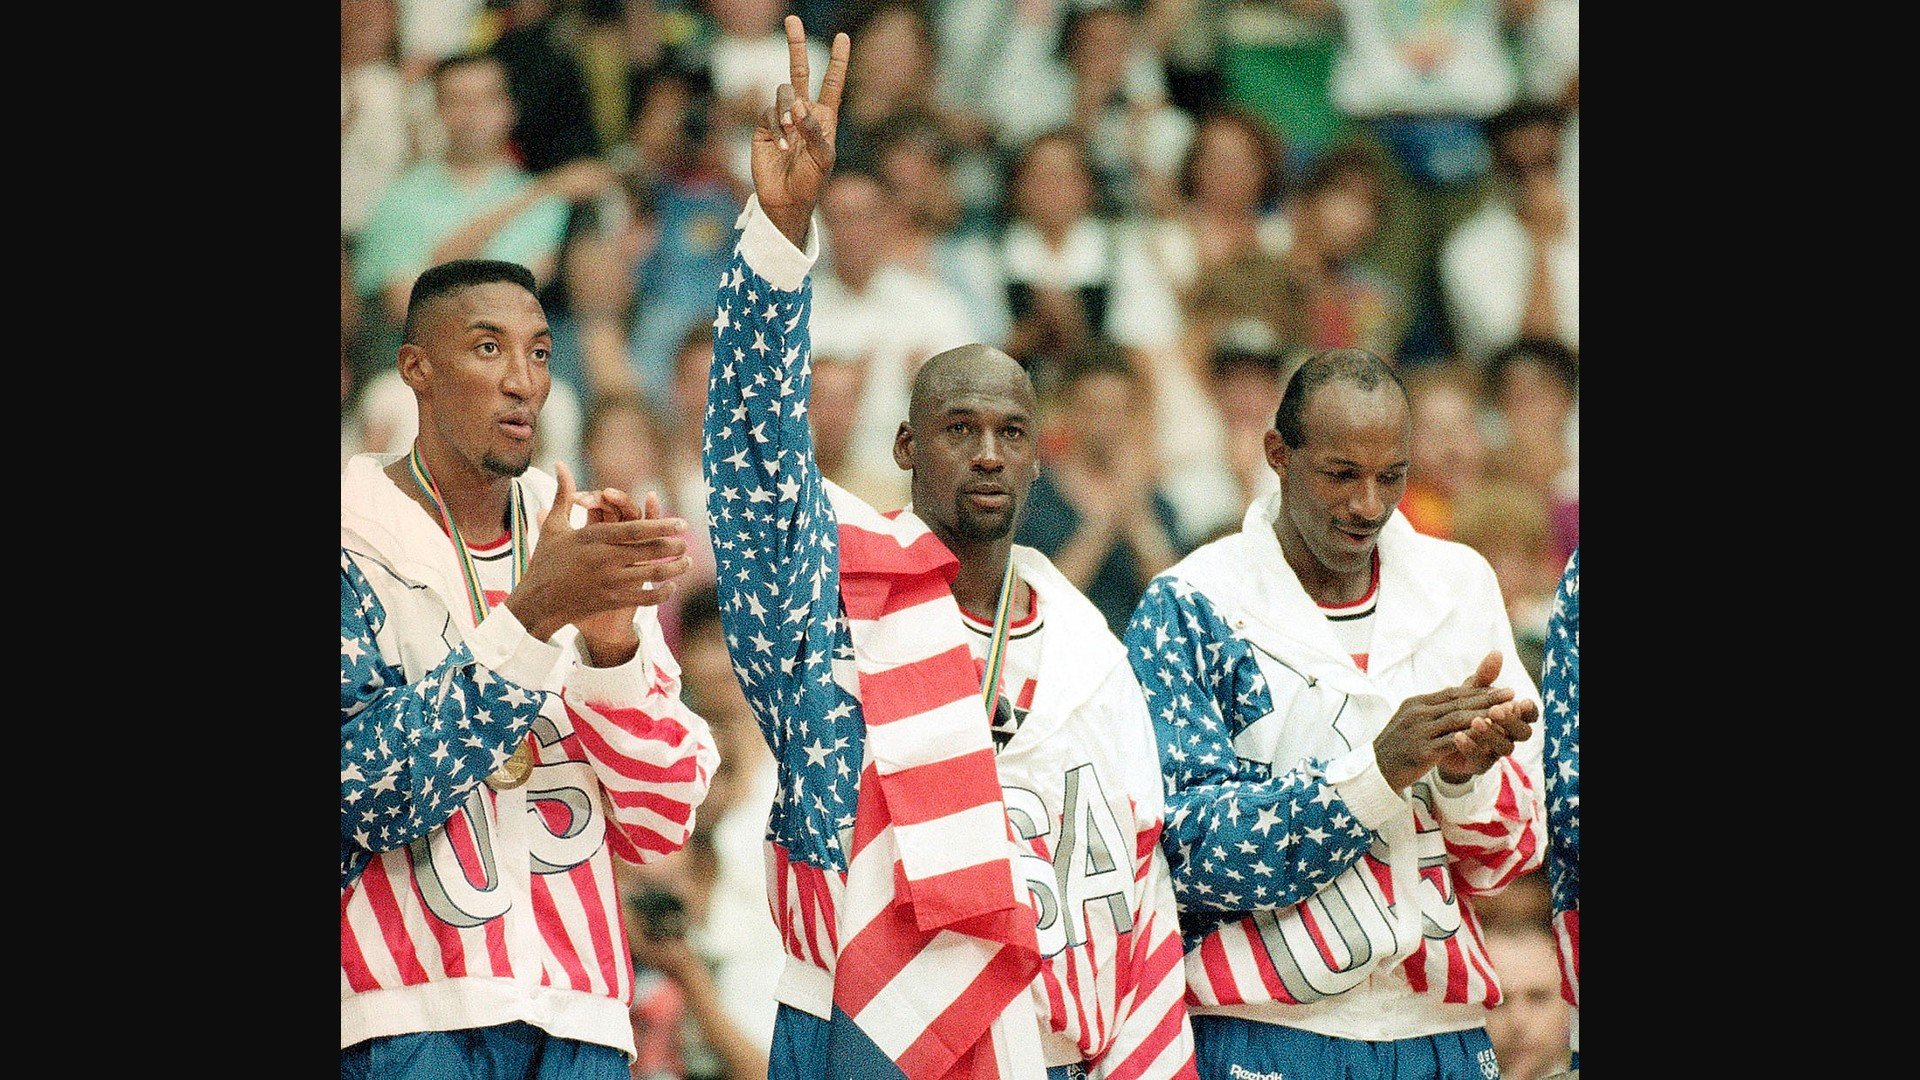 Michael Jordan Dream Team Jersey Sells for $3 Million